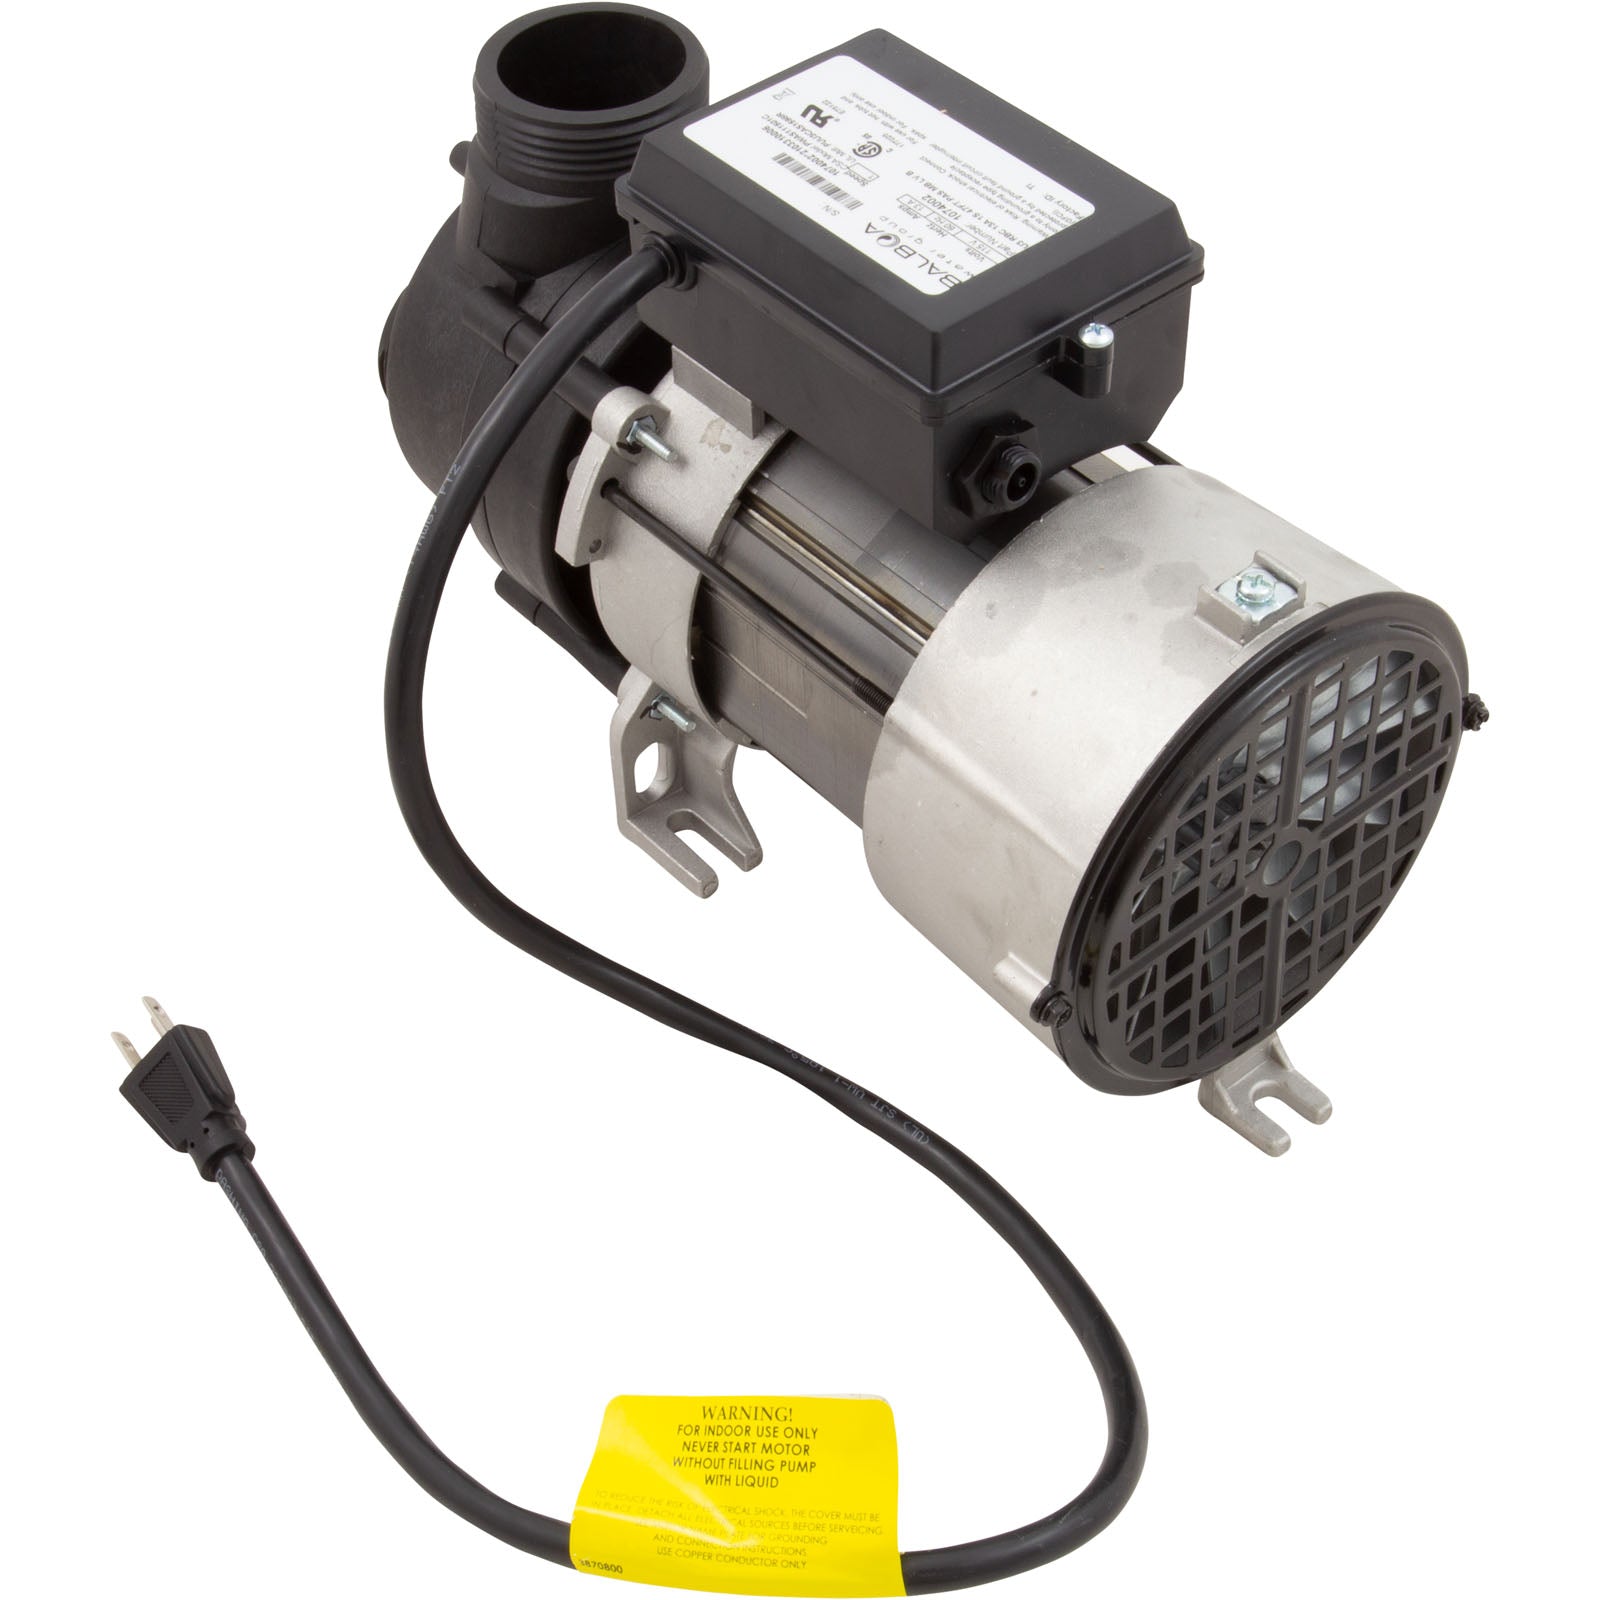 American Standard Pump, 2.1hp 13 amp, Air Switch, Cord (753922-0070A)